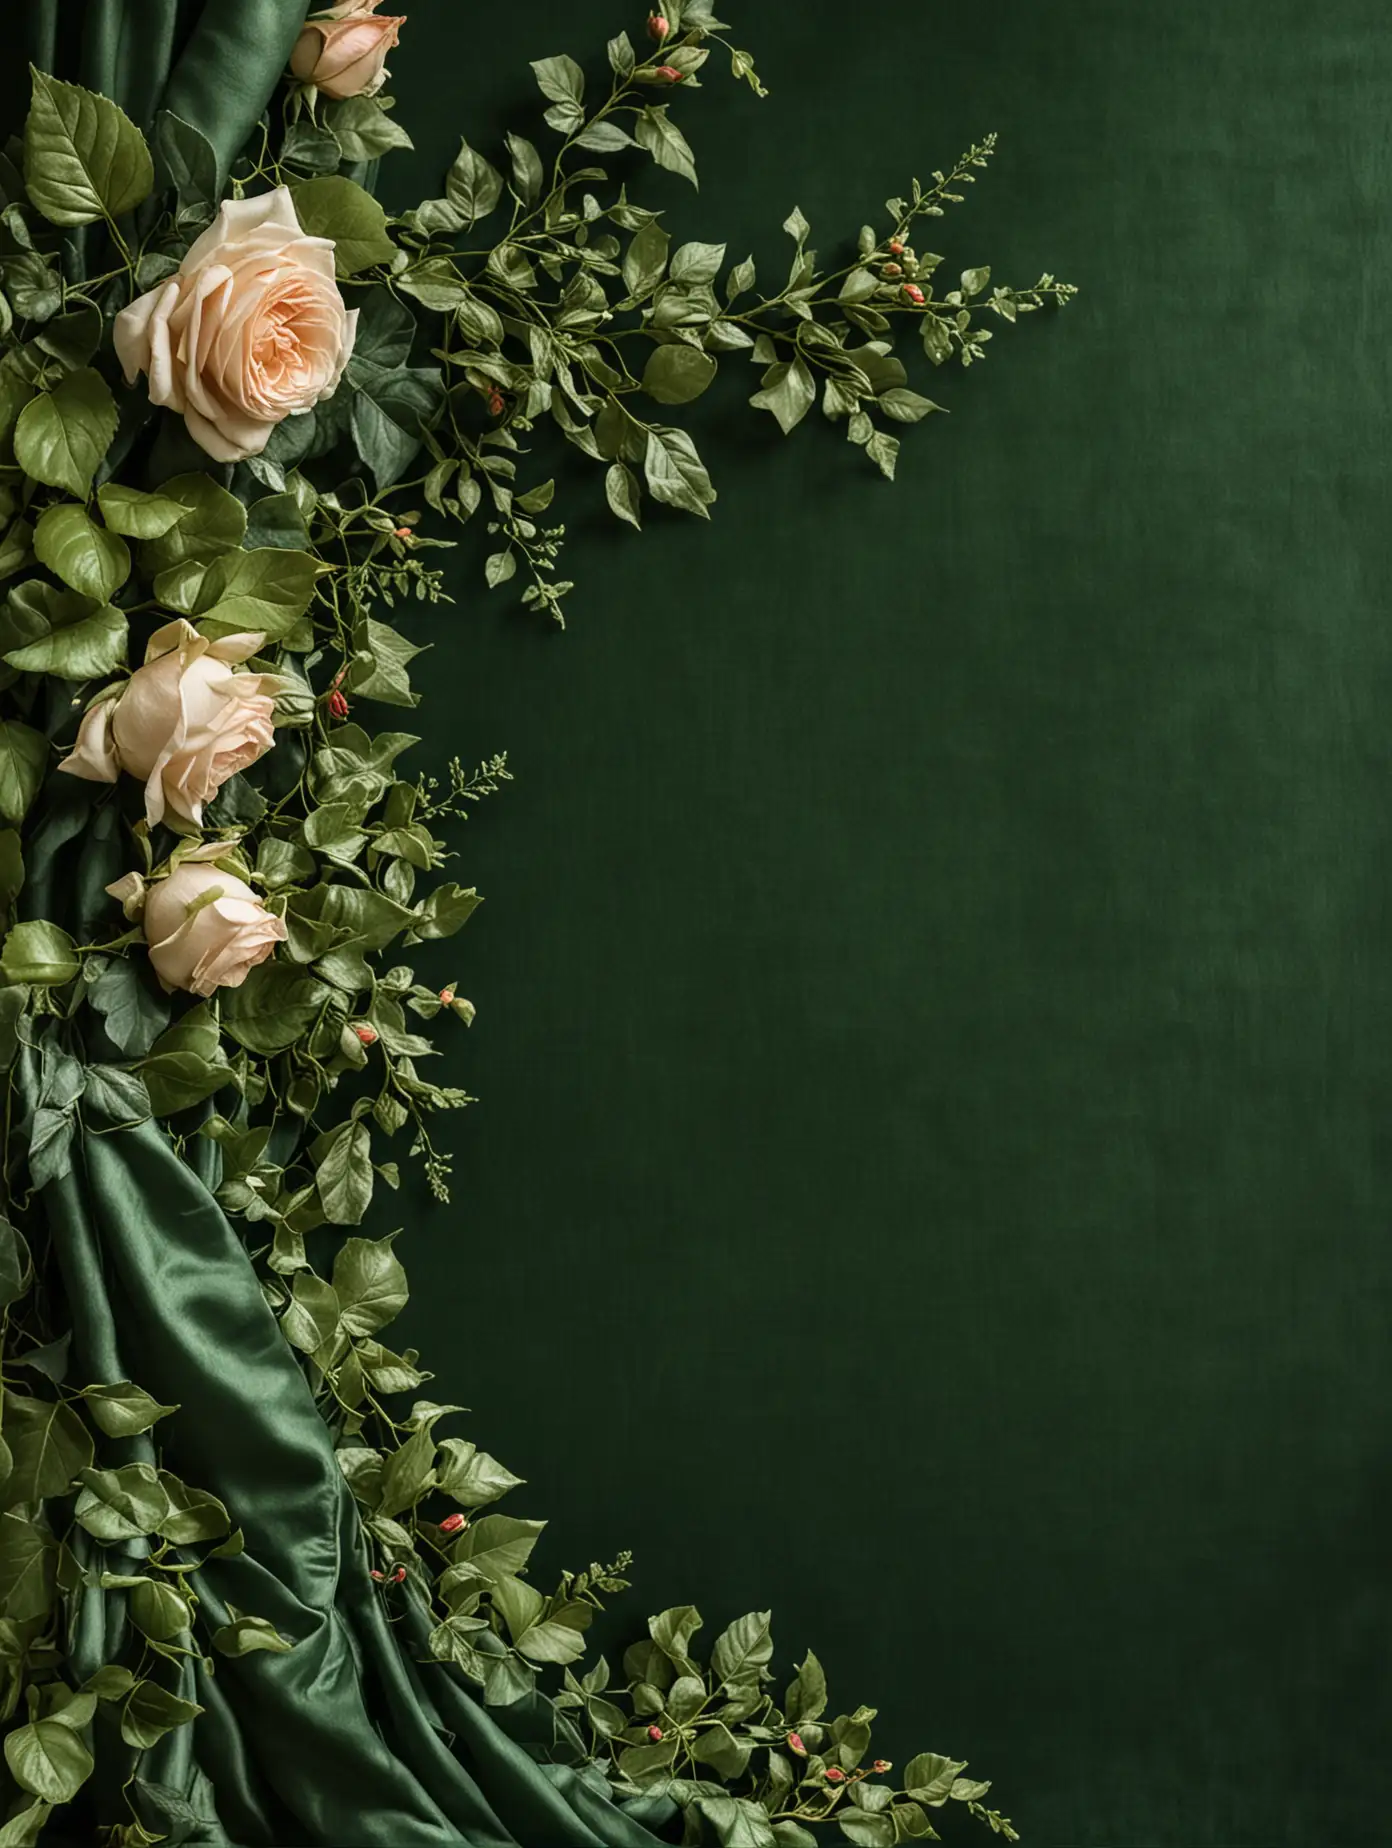 Elegant Border with Roses and Ivy on Green Velvet Background